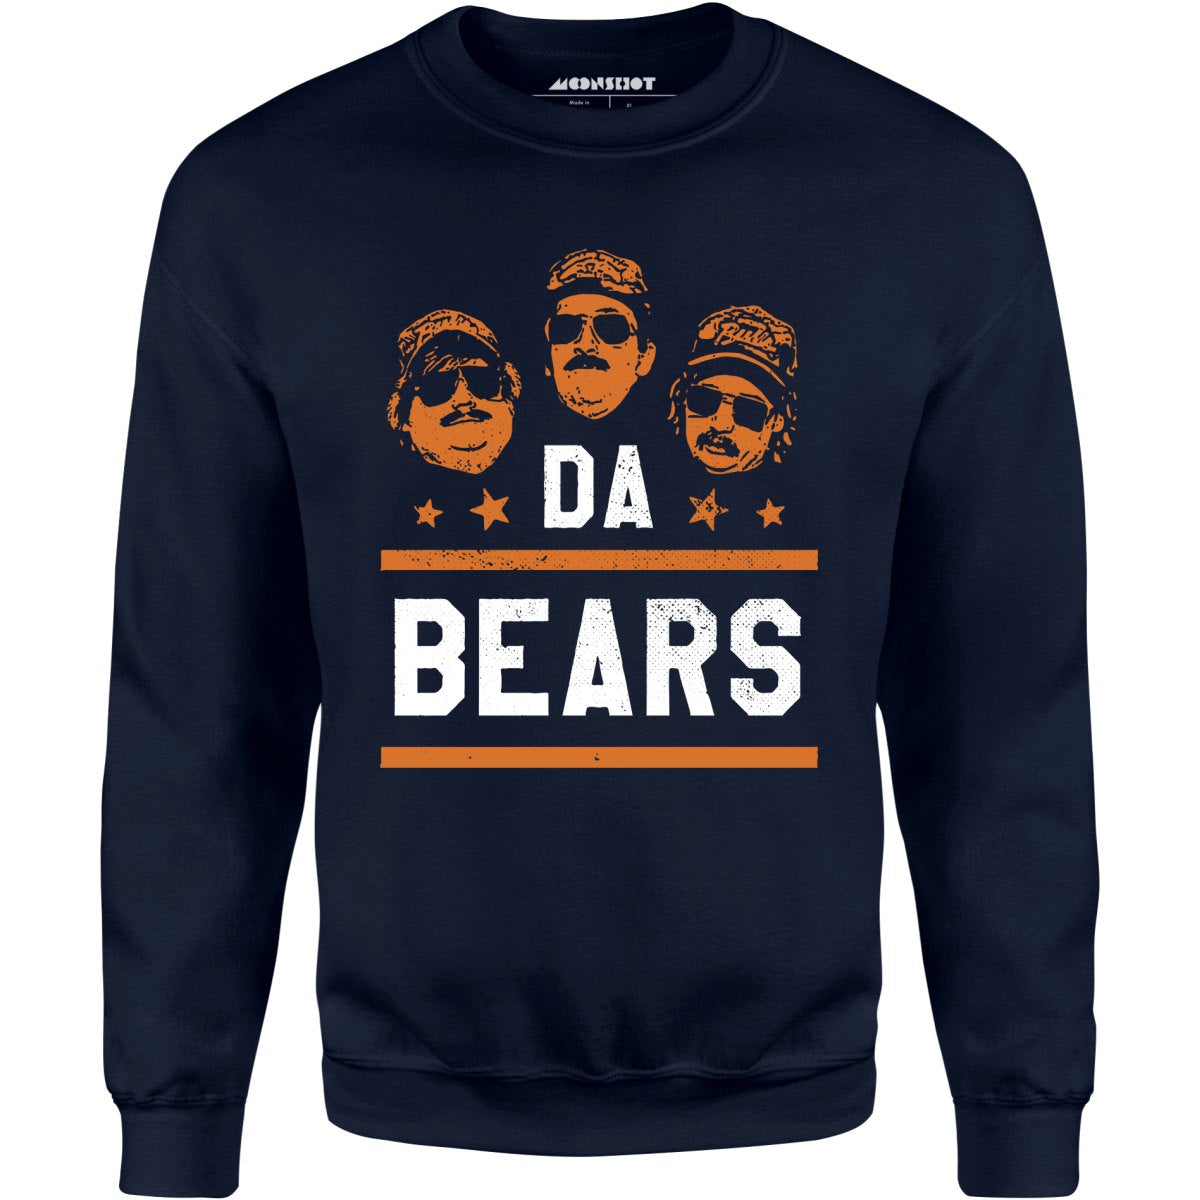 Da Bears - Unisex Sweatshirt